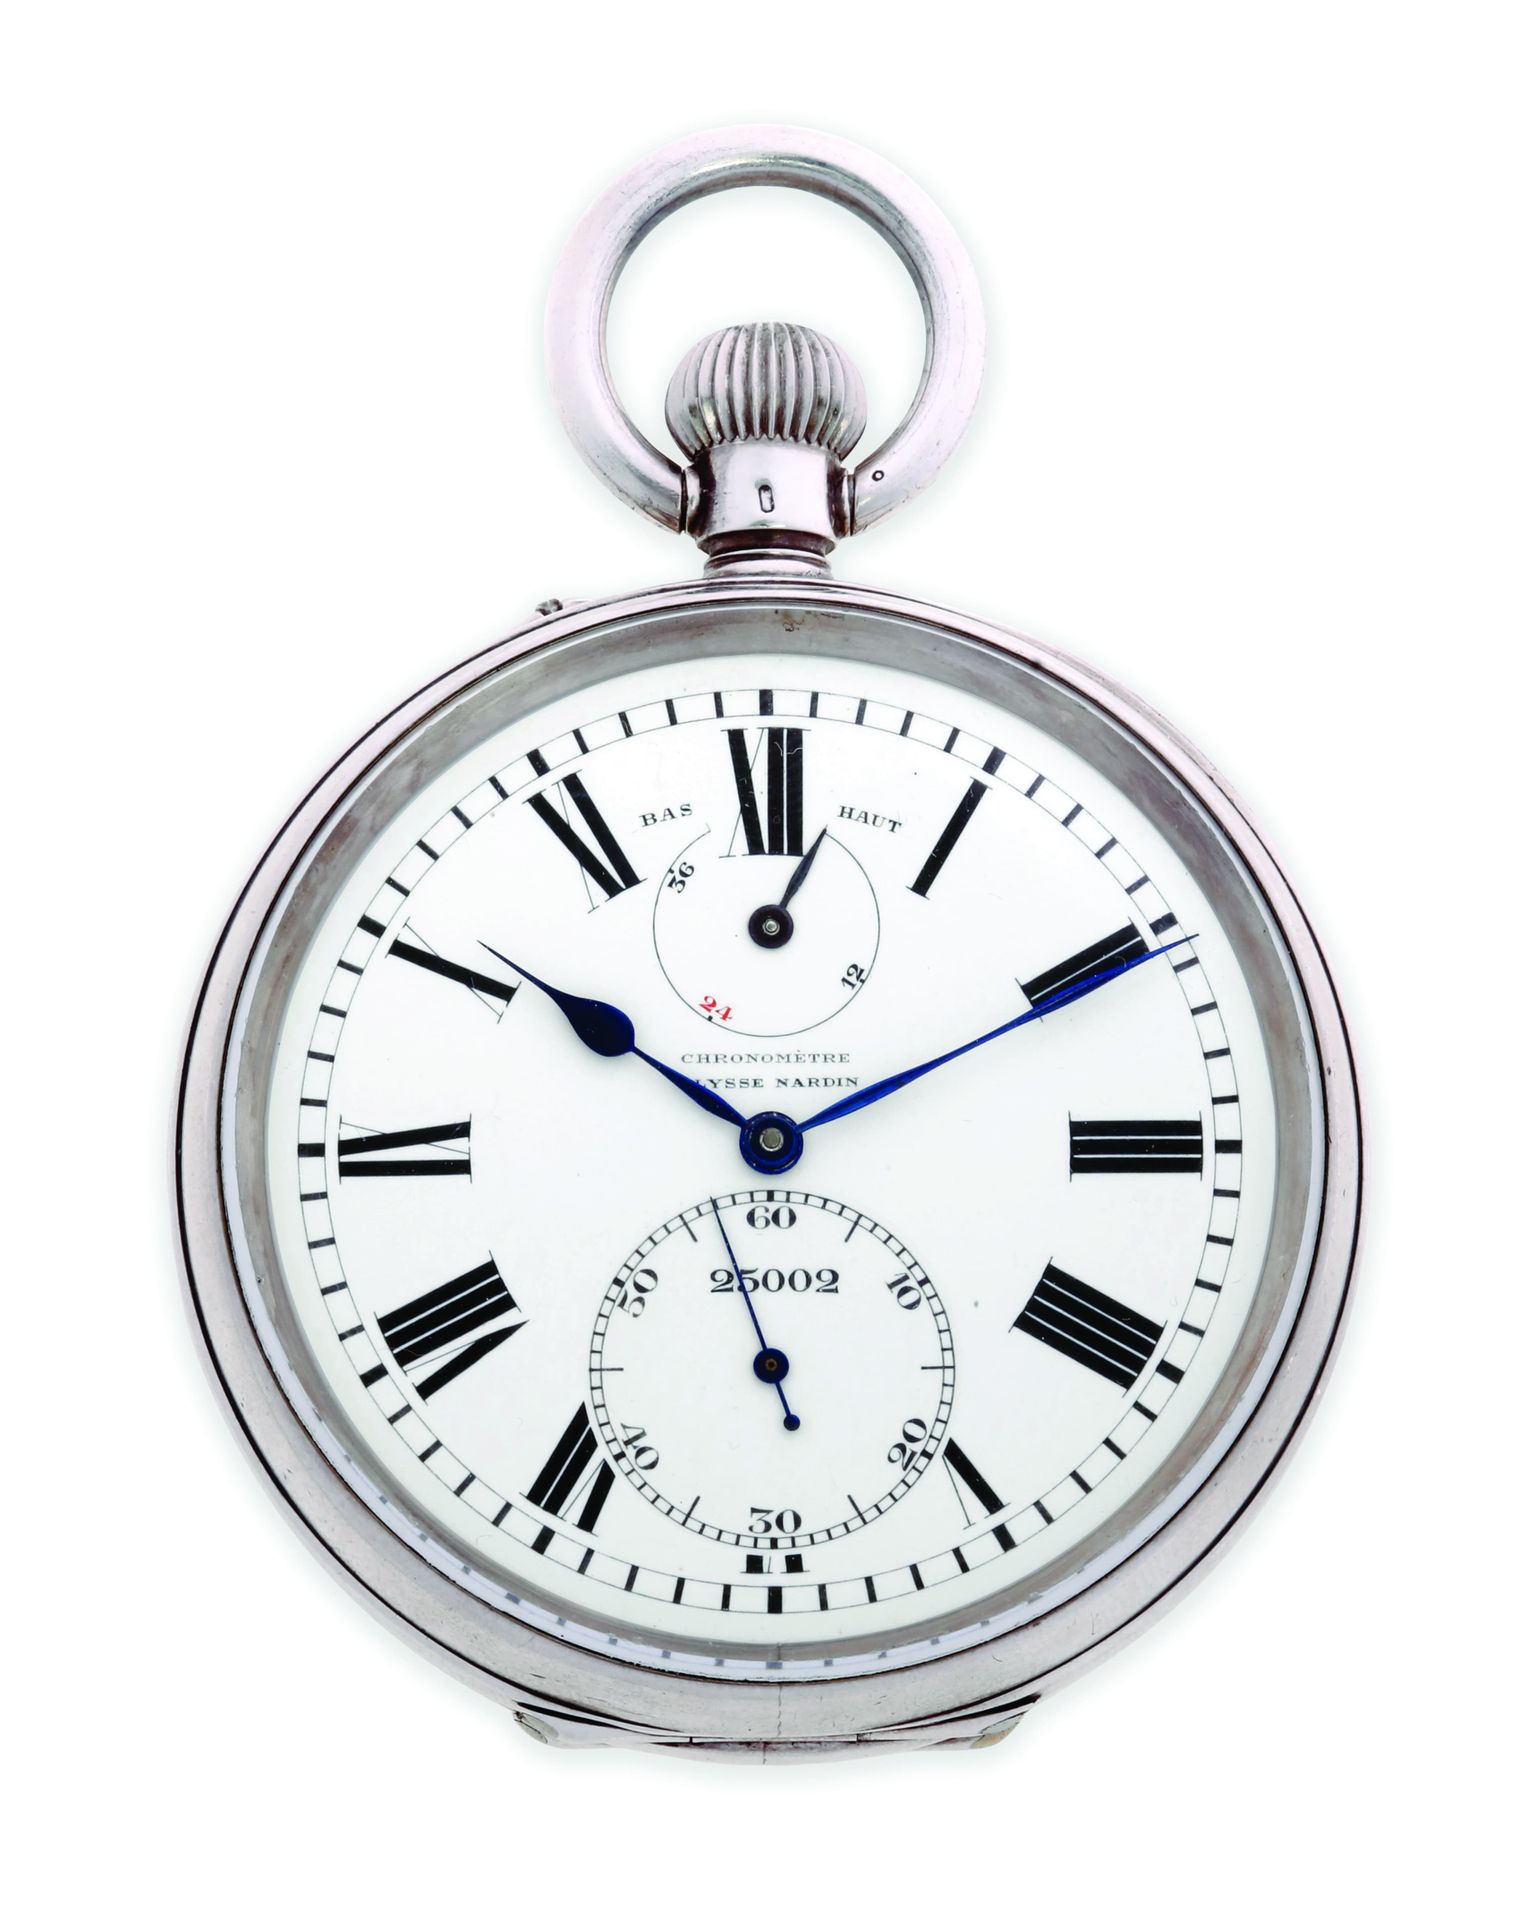 ULYSSE NARDIN Chronometer 25002
925 thousandths silver pocket watch with mechani&hellip;